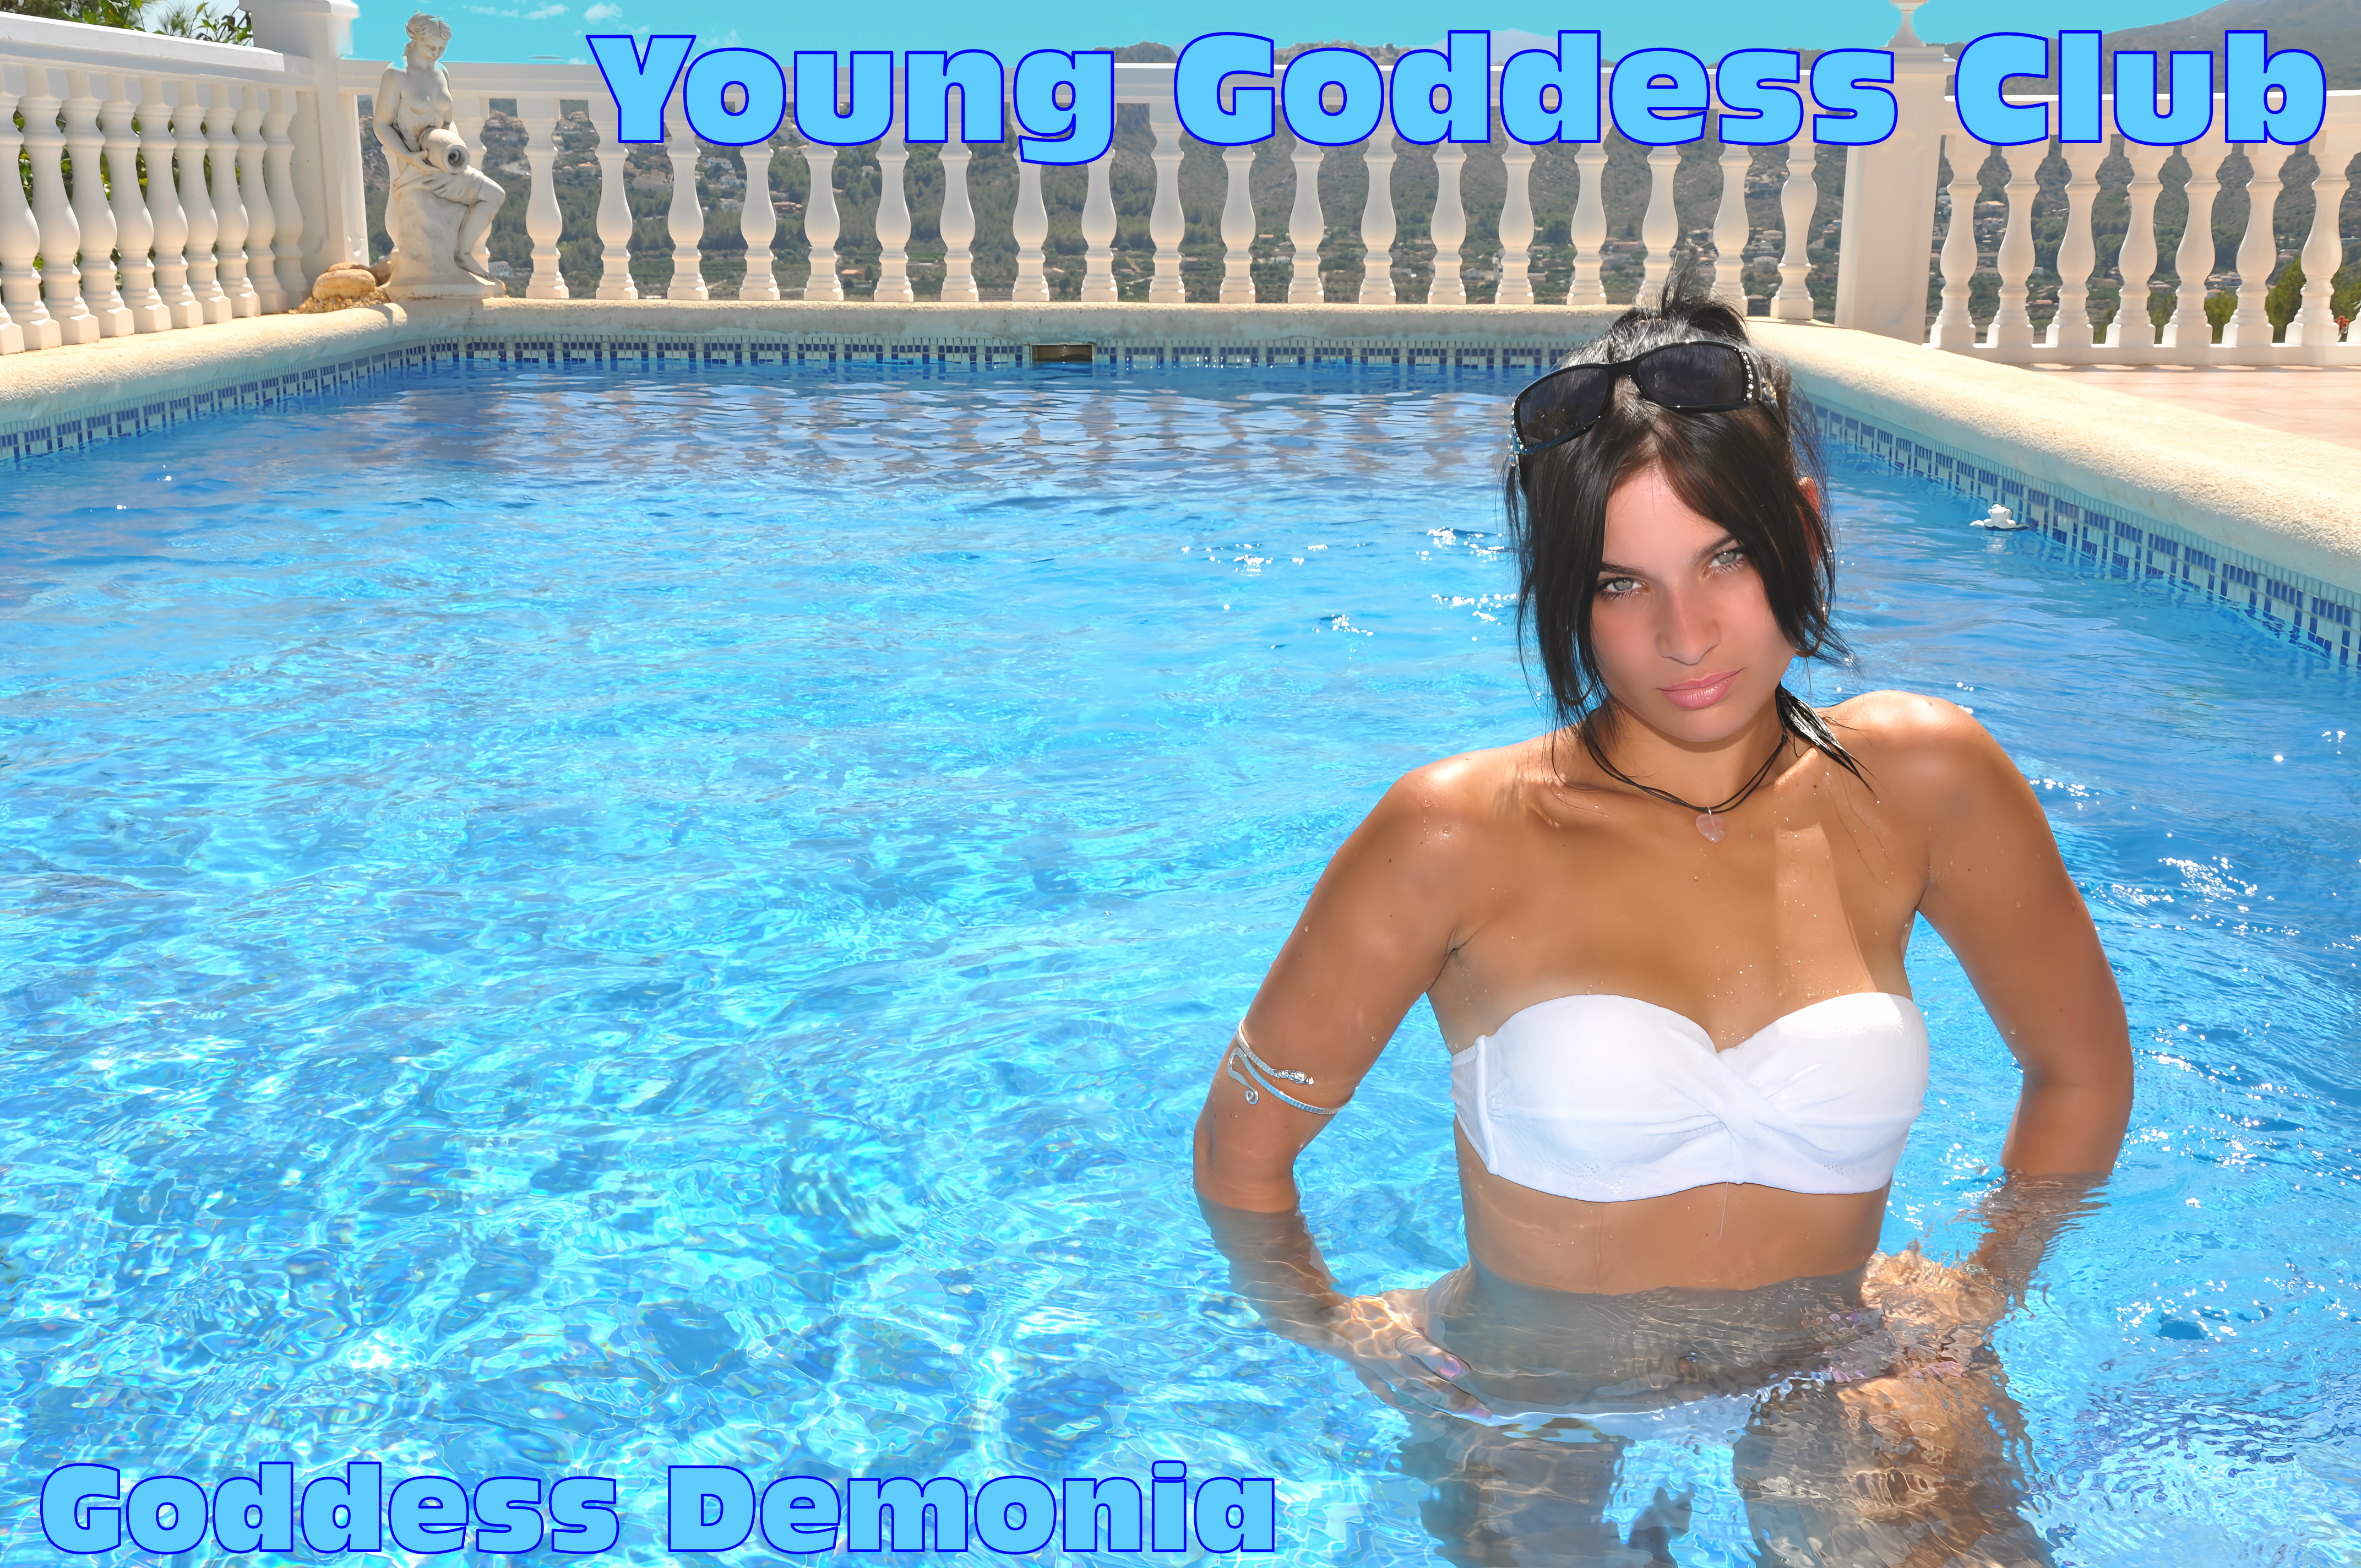 Goddess Demonia the iconic Mistress of Young Goddess Club. 